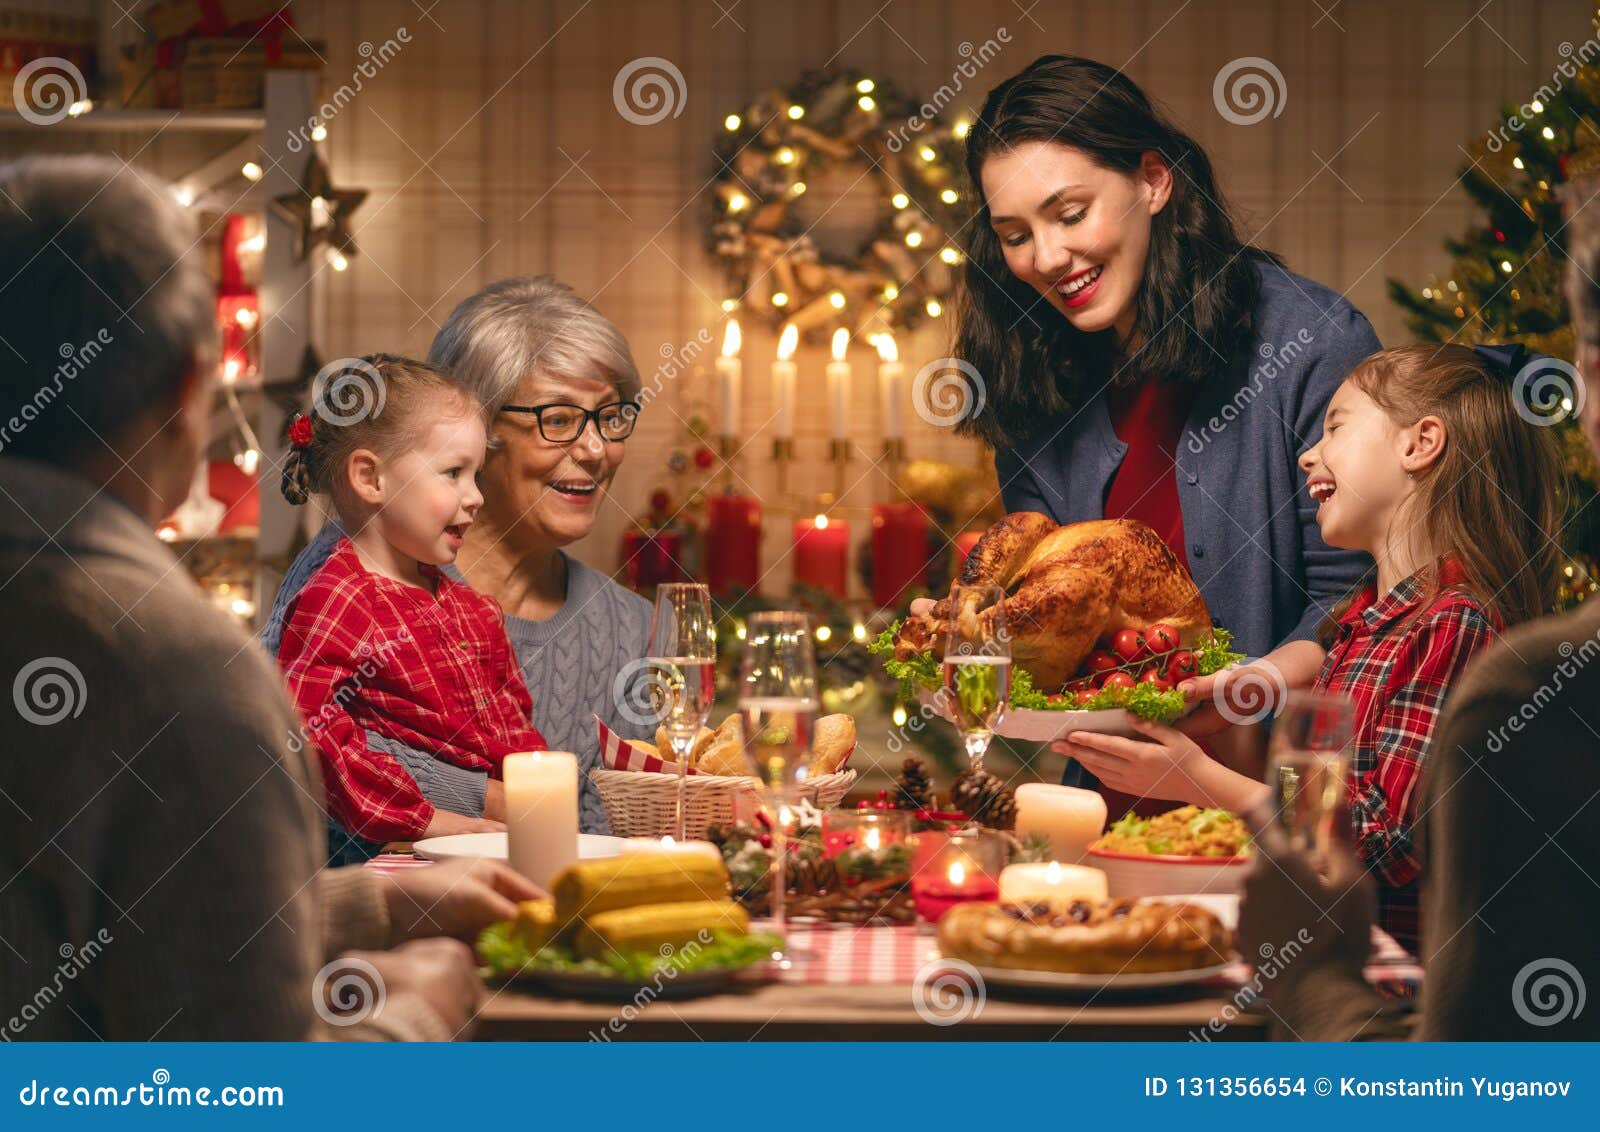 family celebrating christmas